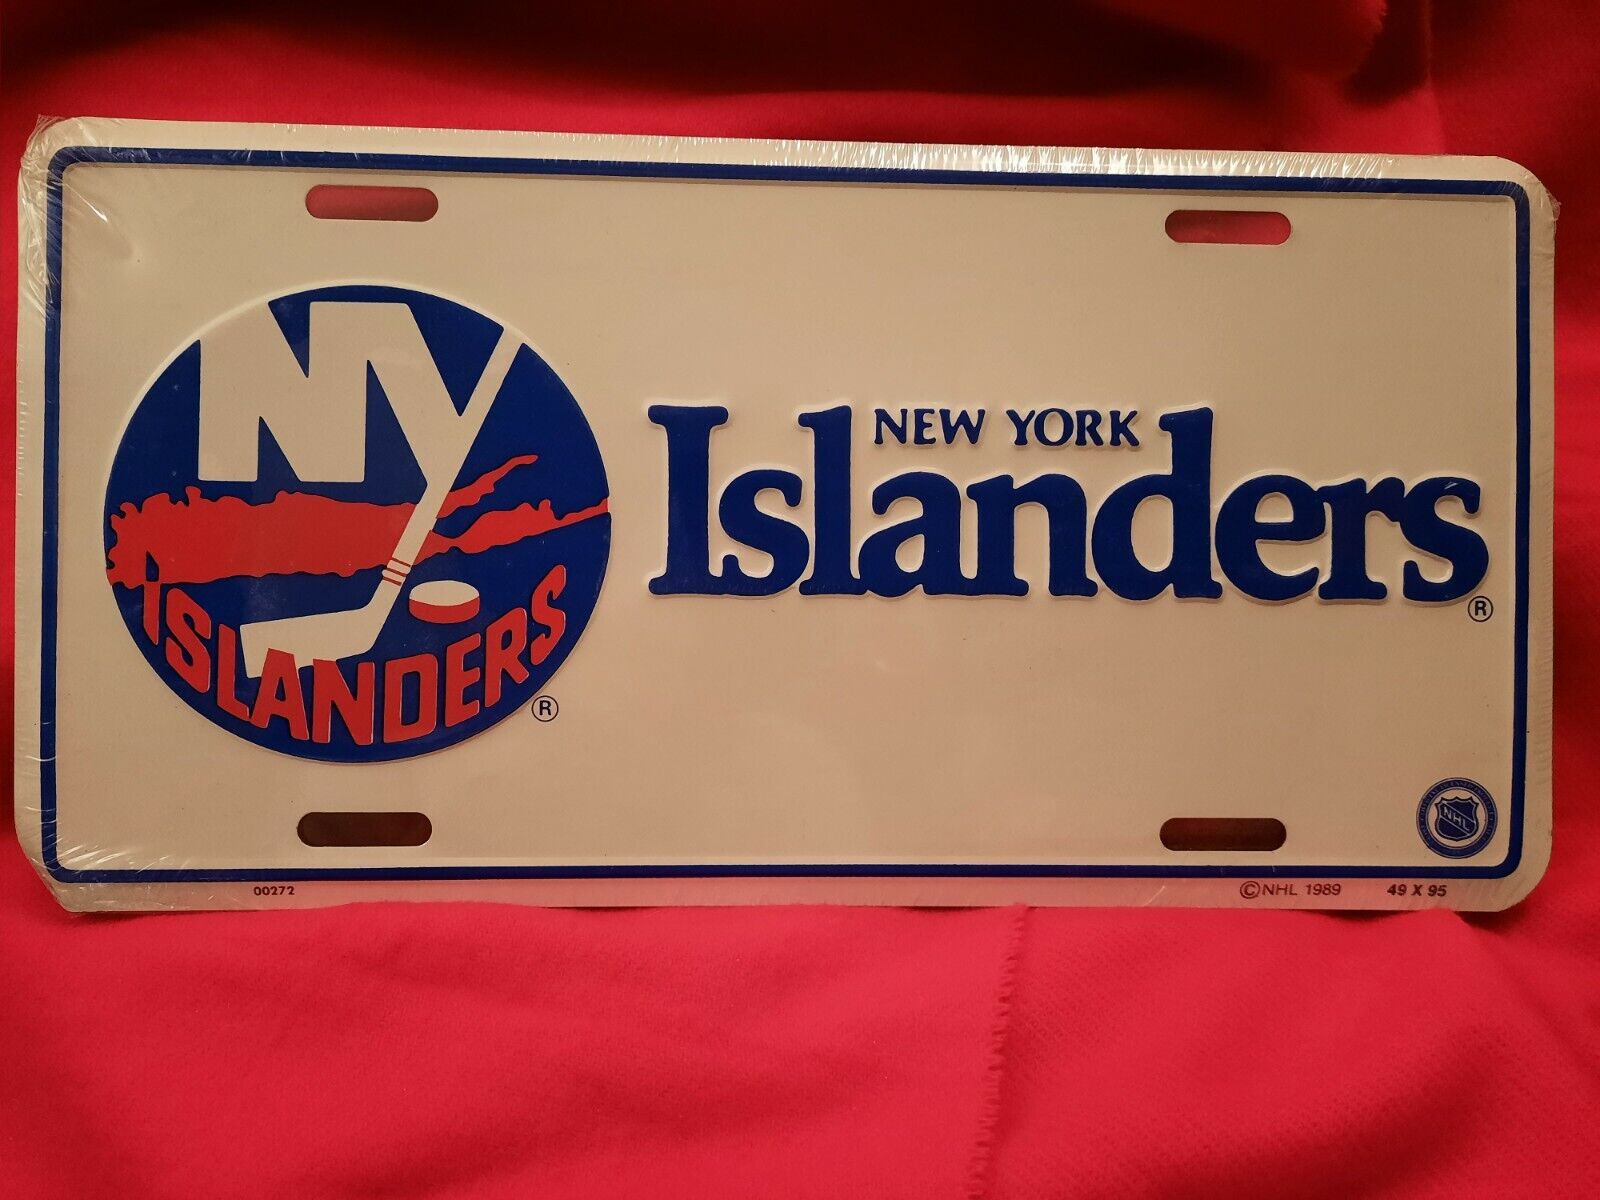 🔥RARE Vintage NEW YORK ISLANDERS 1989 Novelty Auto License Plate, NOS SEALED